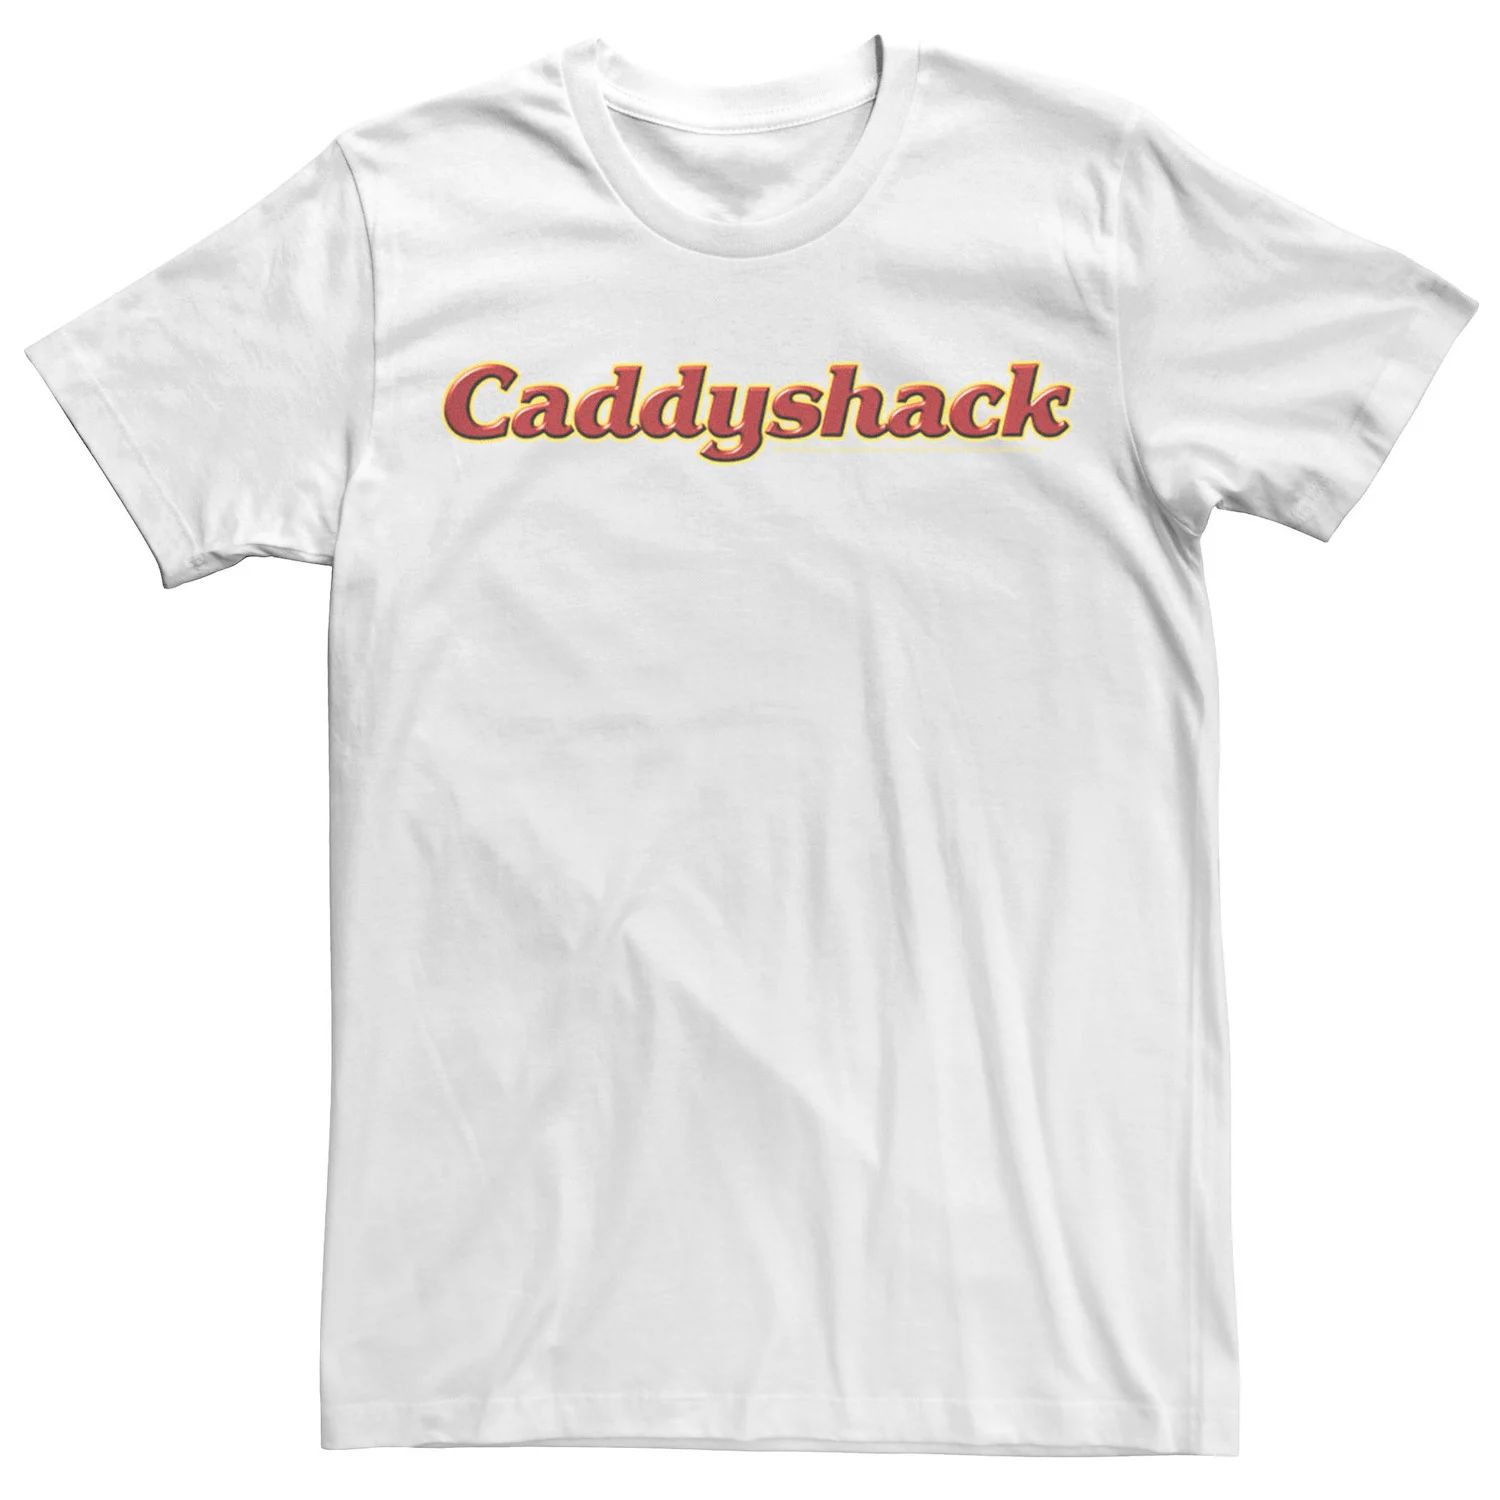 Мужская футболка с простым логотипом Caddyshack Licensed Character, белый